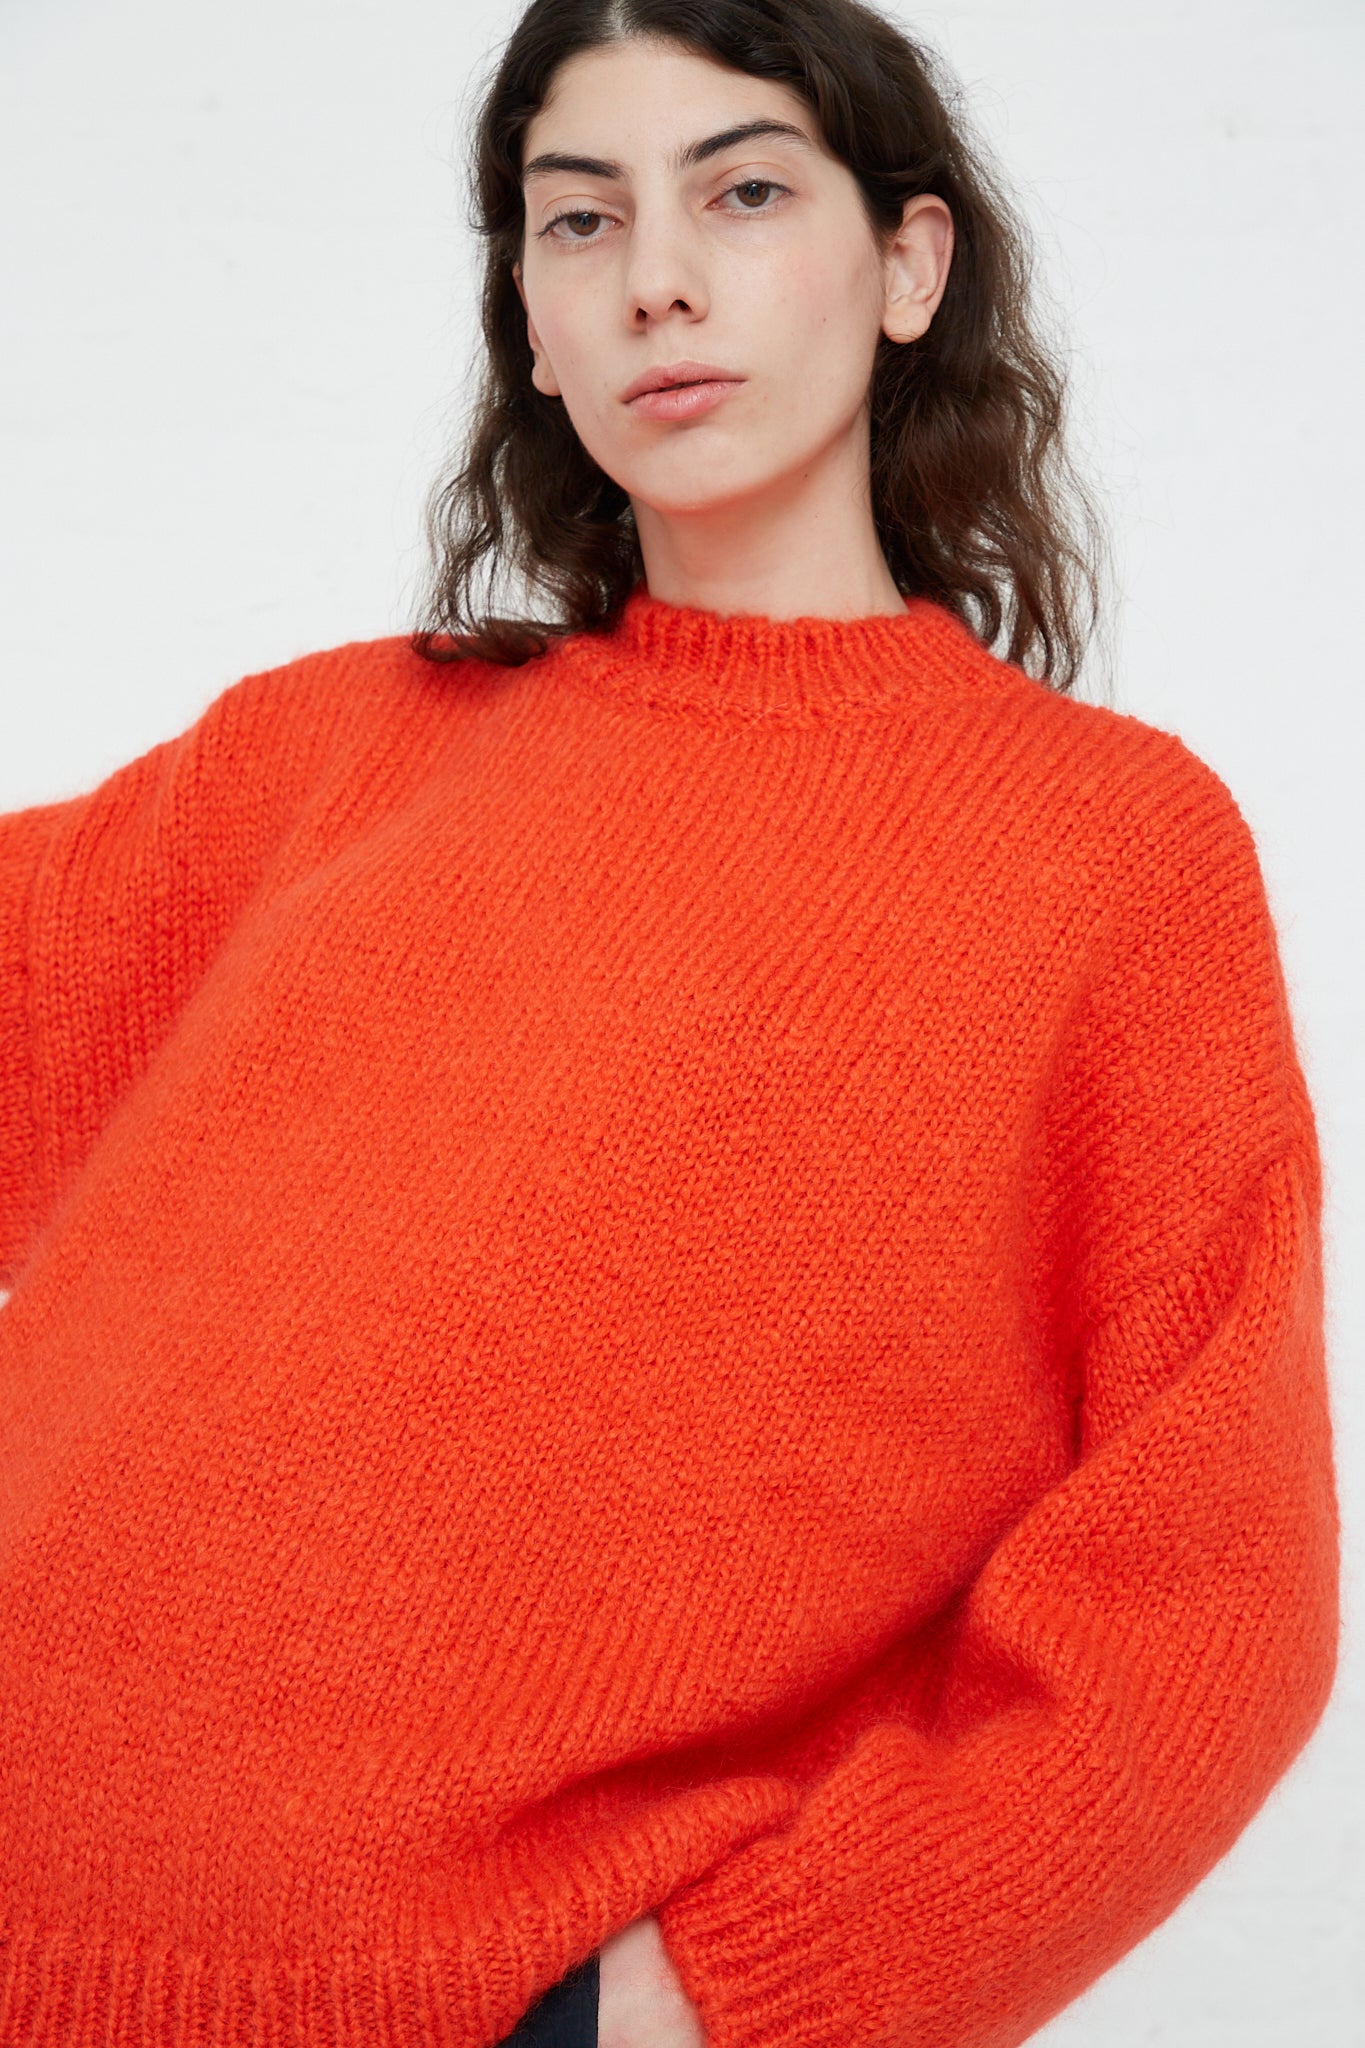 A model wearing an oversized Cordera Mohair Sweater in Tangerine.